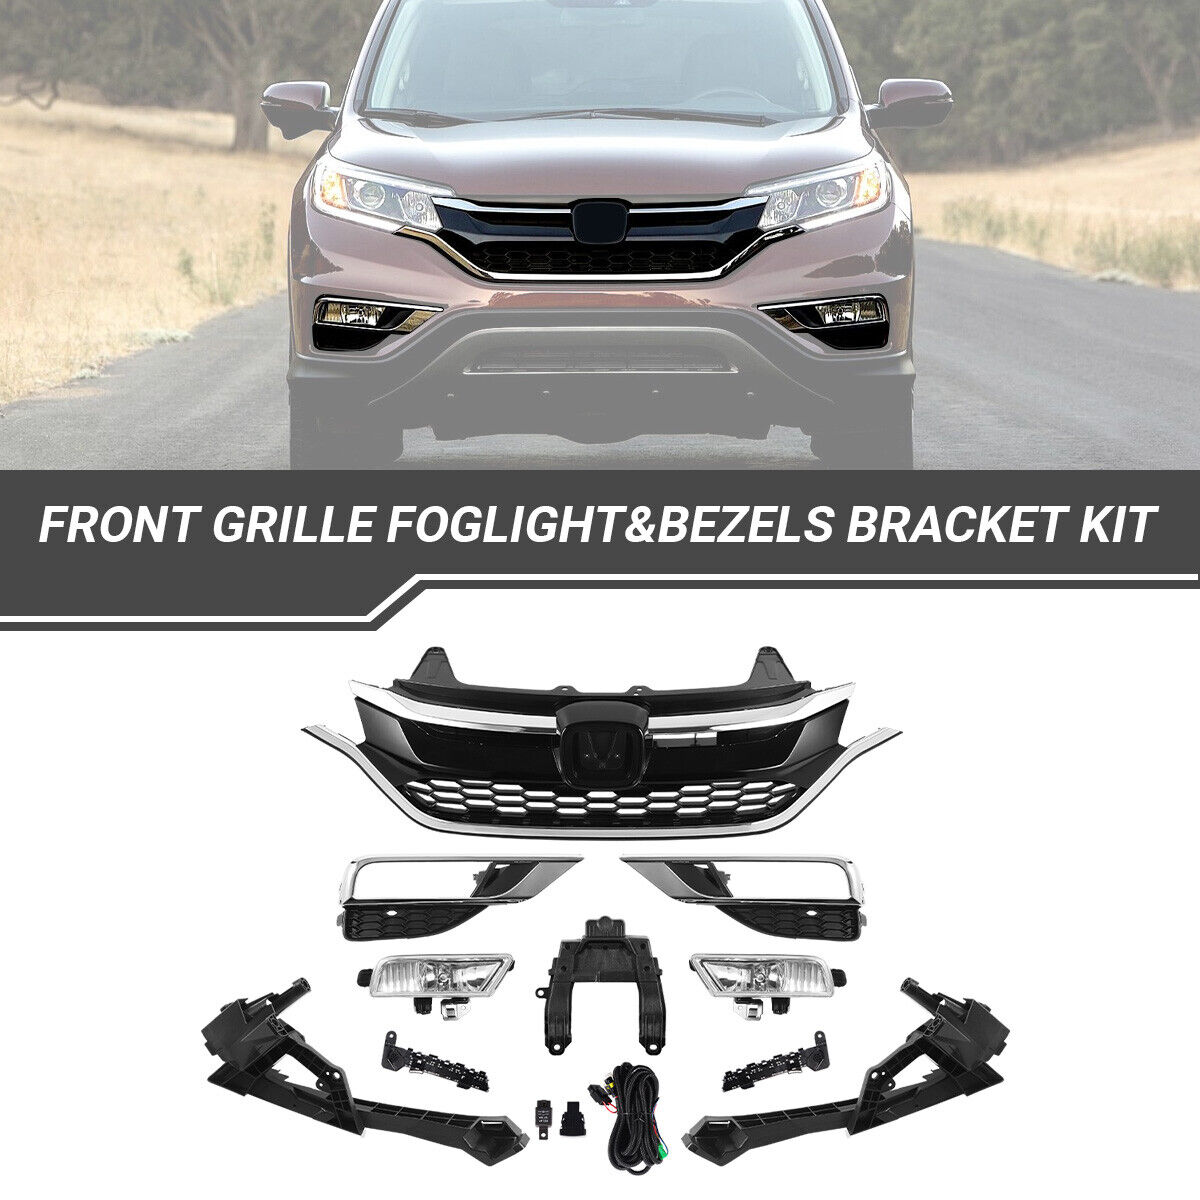 Fits 2015-2016 Honda CRV CR-V Front Grille Foglight&Bezels Bracket Kit Set 11pcs